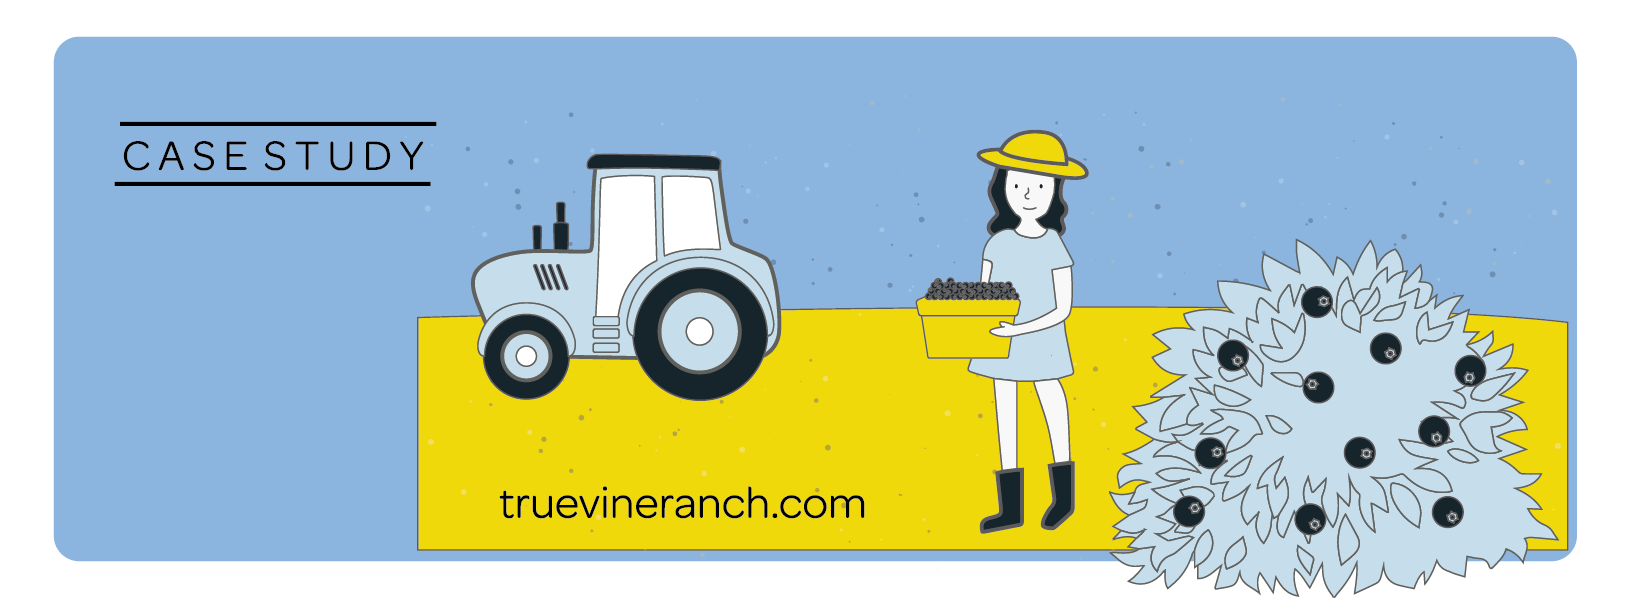 seo for true vine ranch